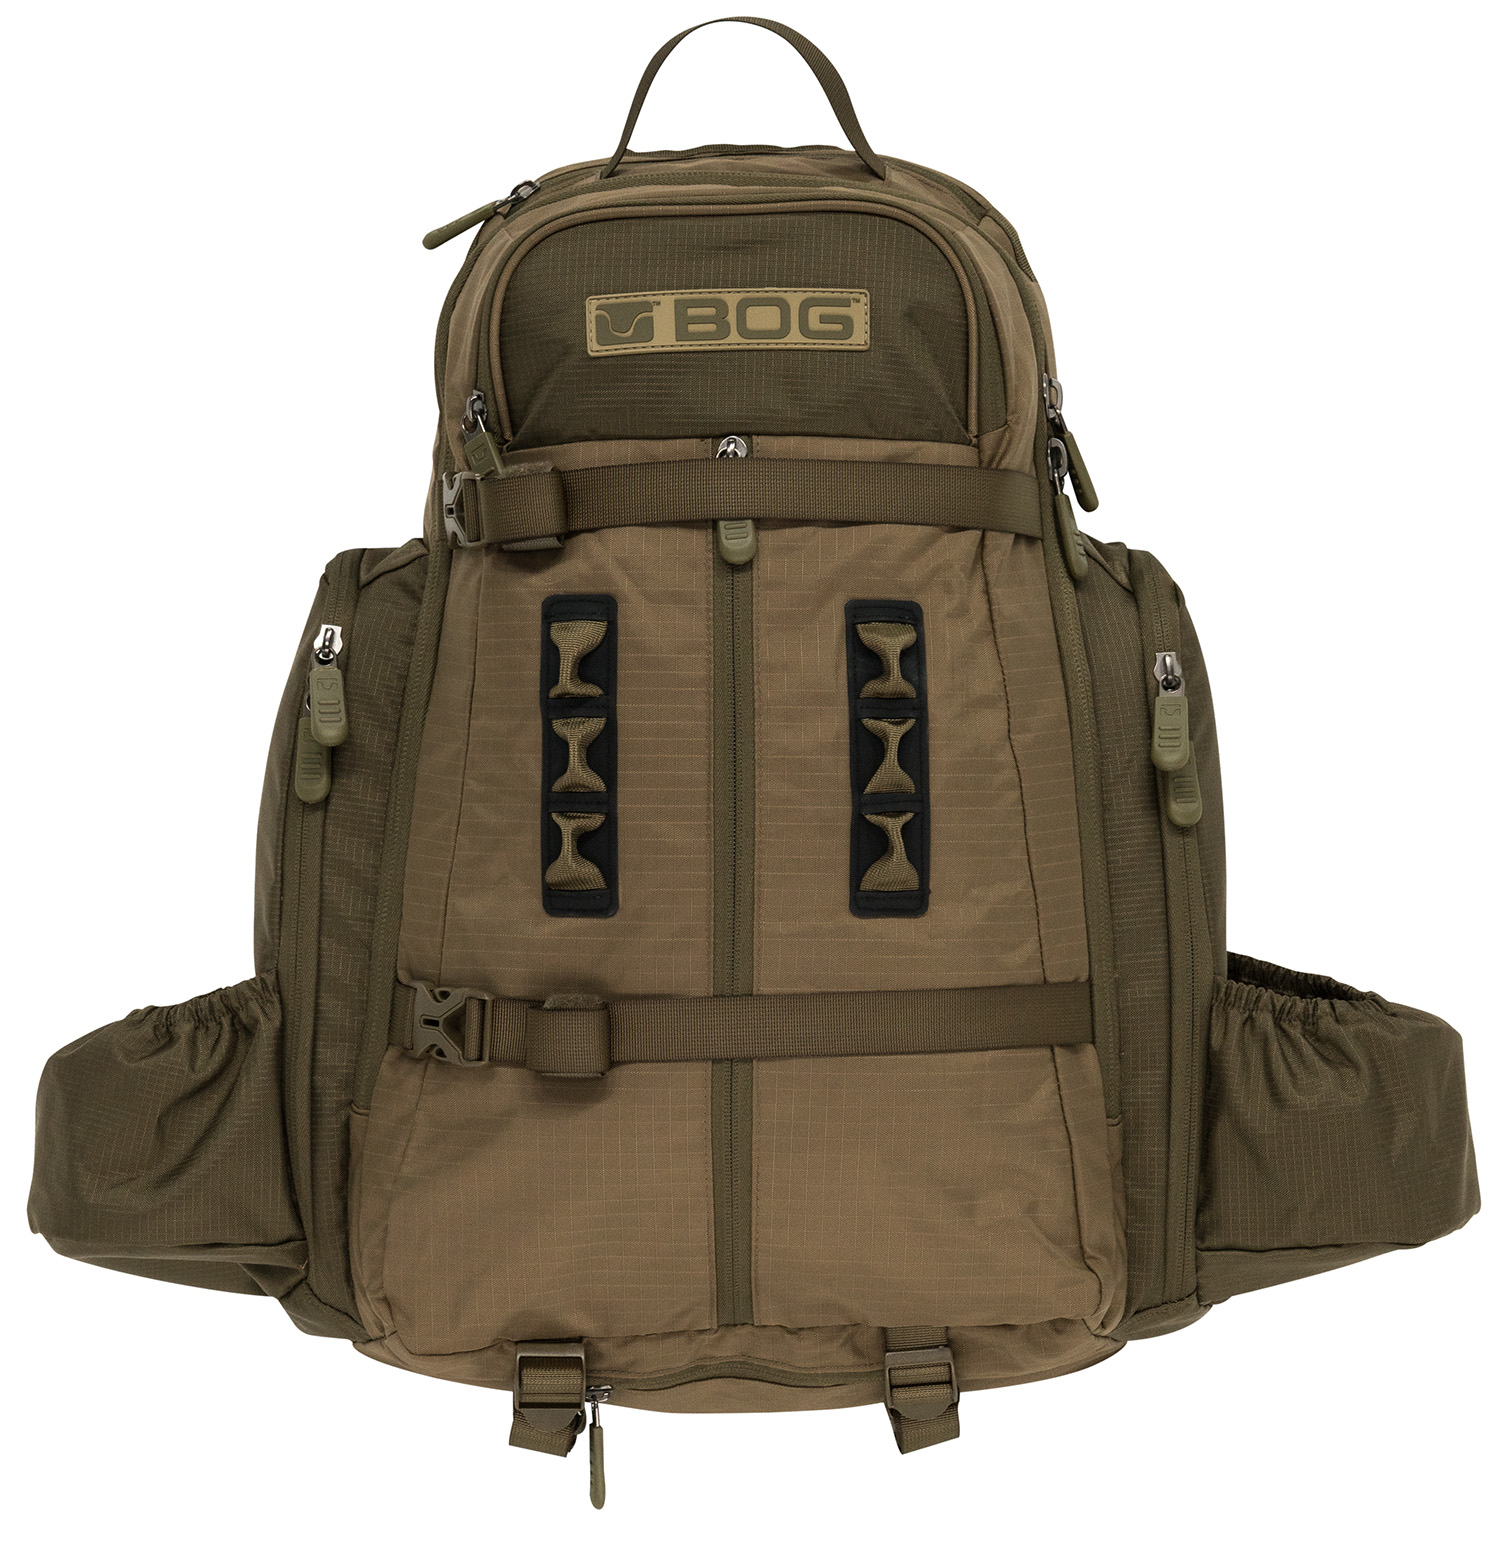 Bog-Pod 1159182 Kinetic Hunting Day Pack Lightweight Made Of Tear Resistant Nylon With OD Green Finish, YKK Zipper, Rain